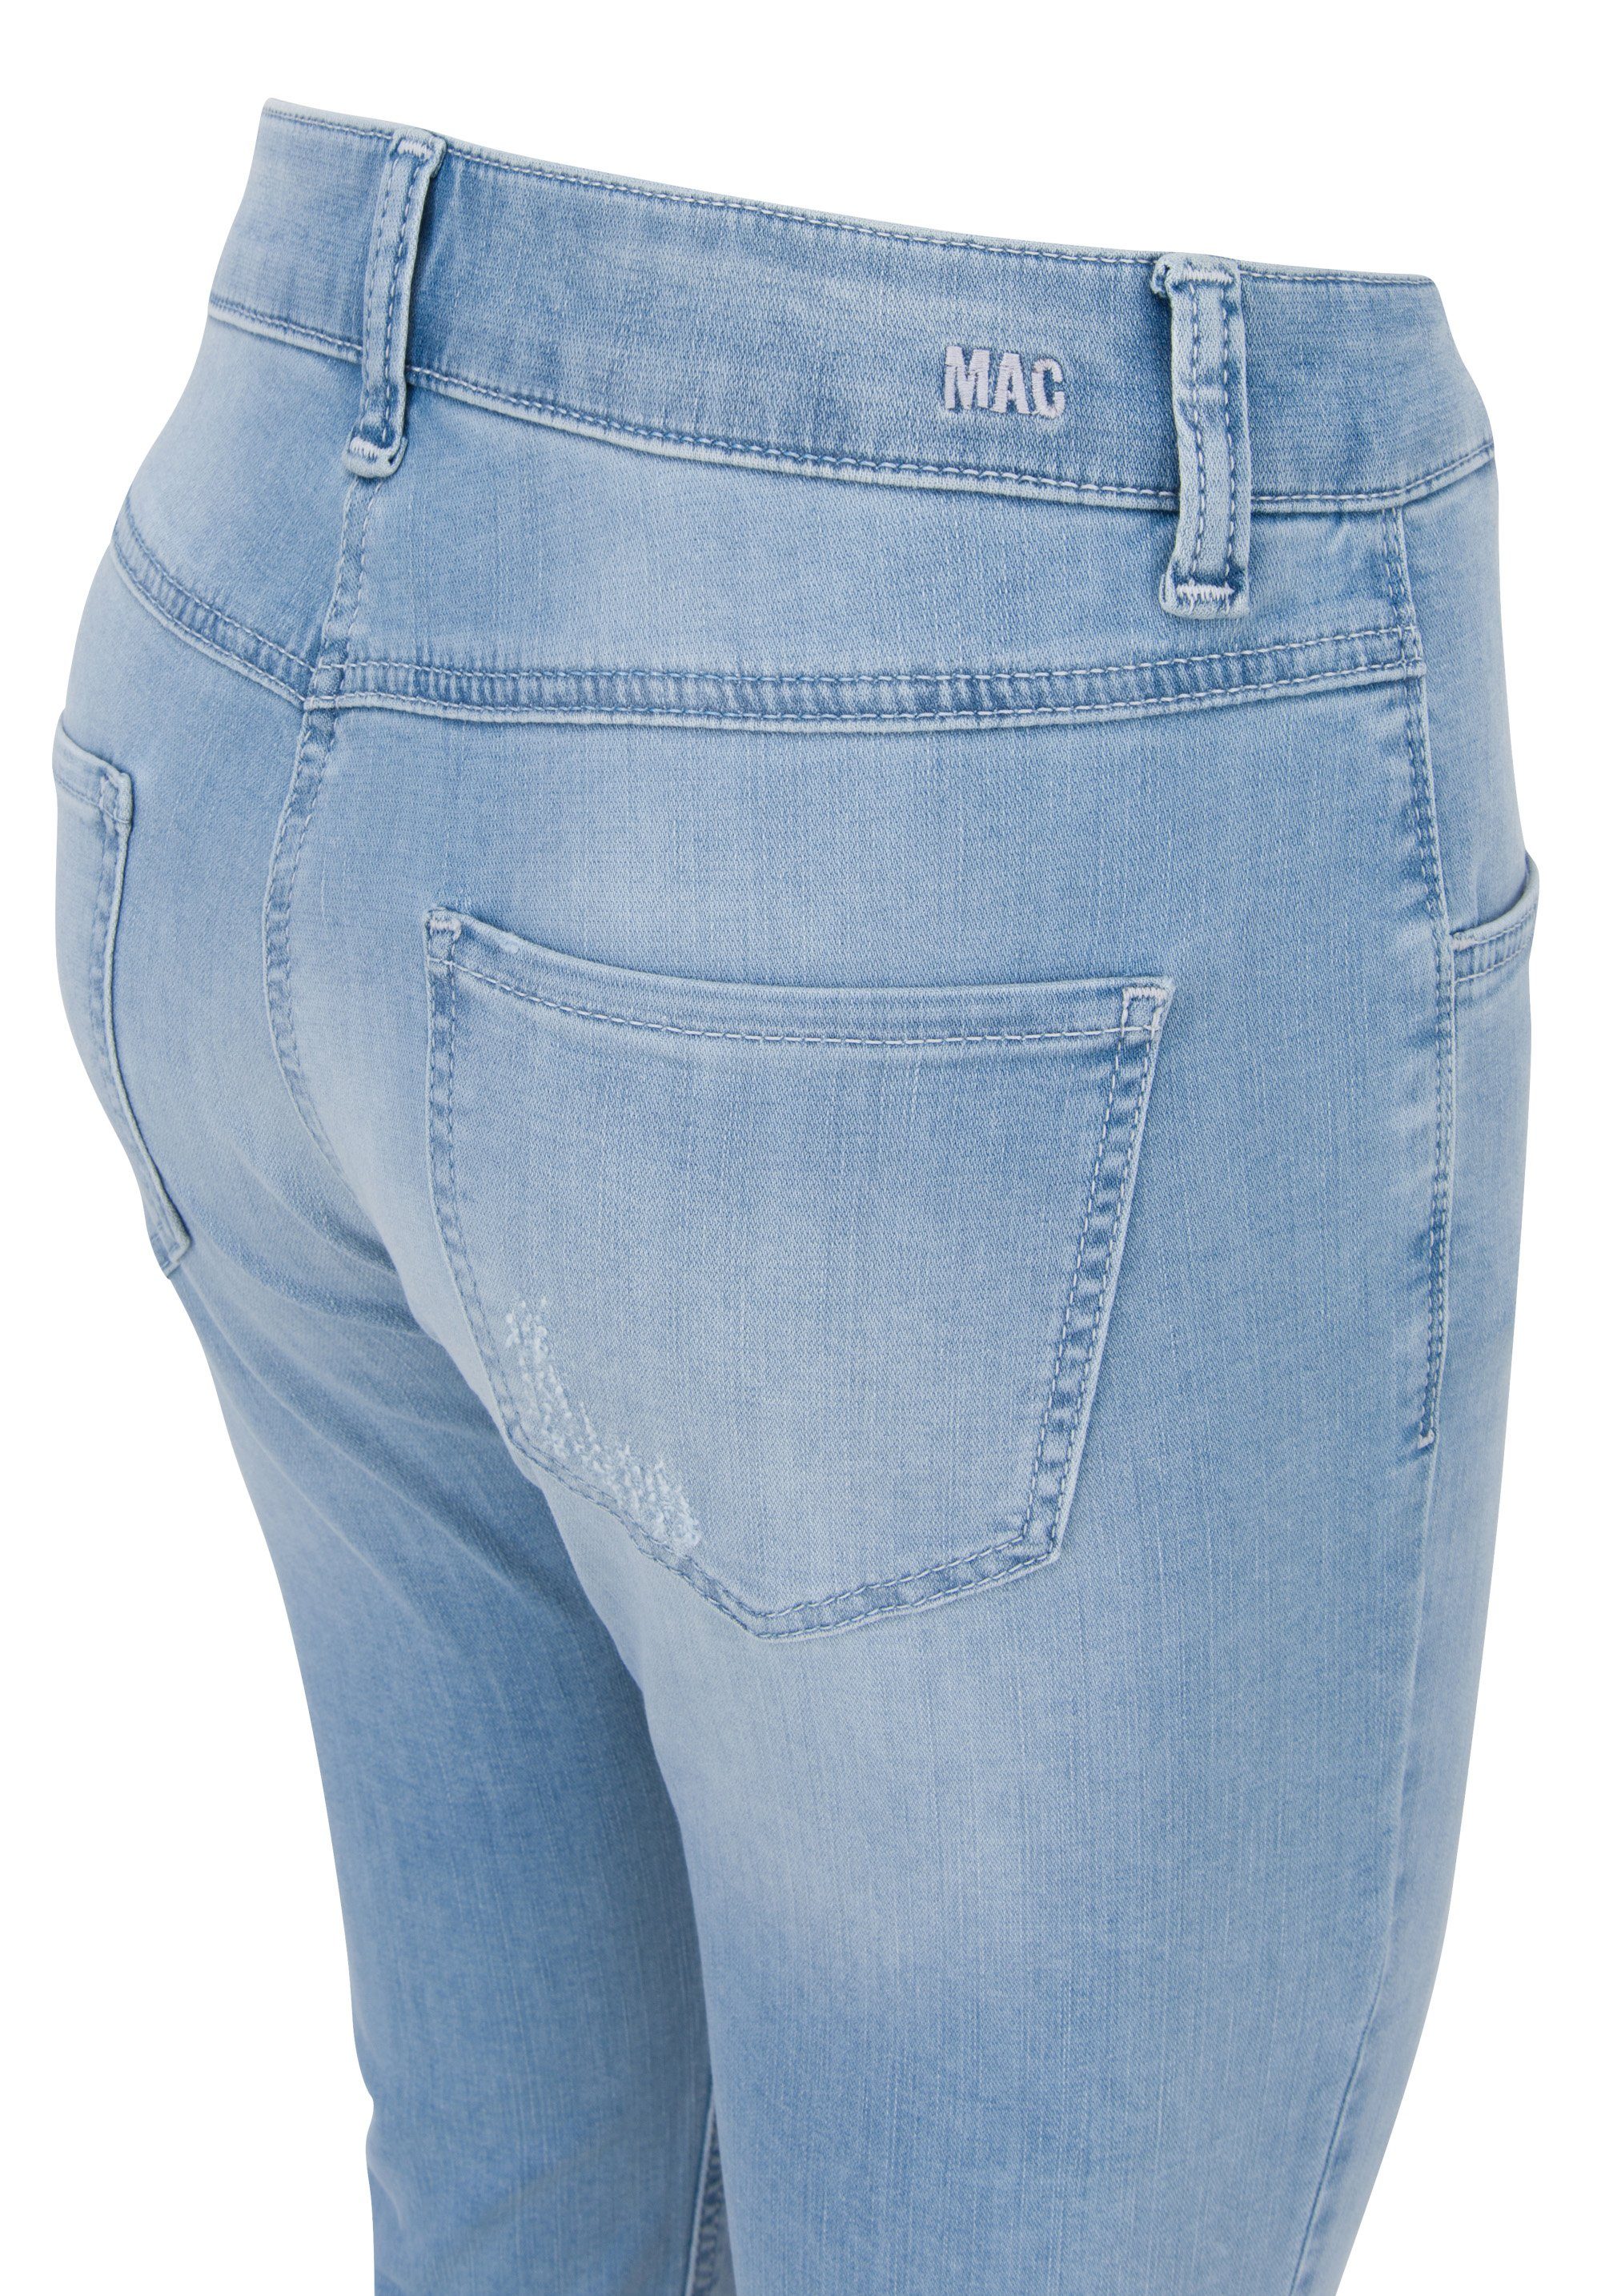 CAPRI light wash Stretch-Jeans grinded blue D426 MAC MAC 5917-90-0394